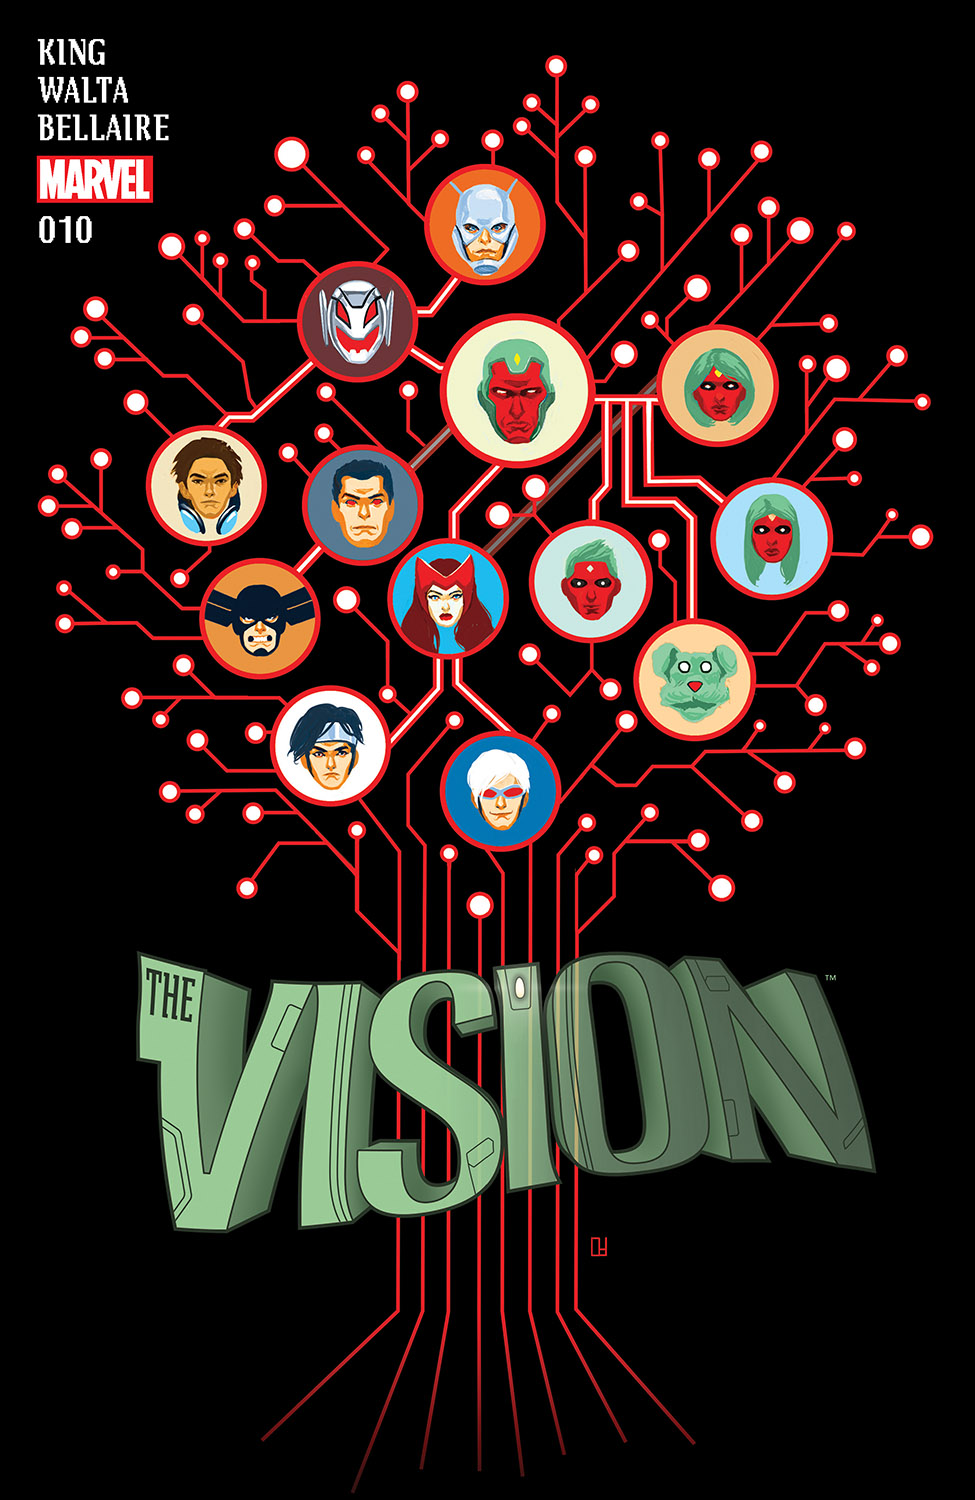 Vision (2015) #10